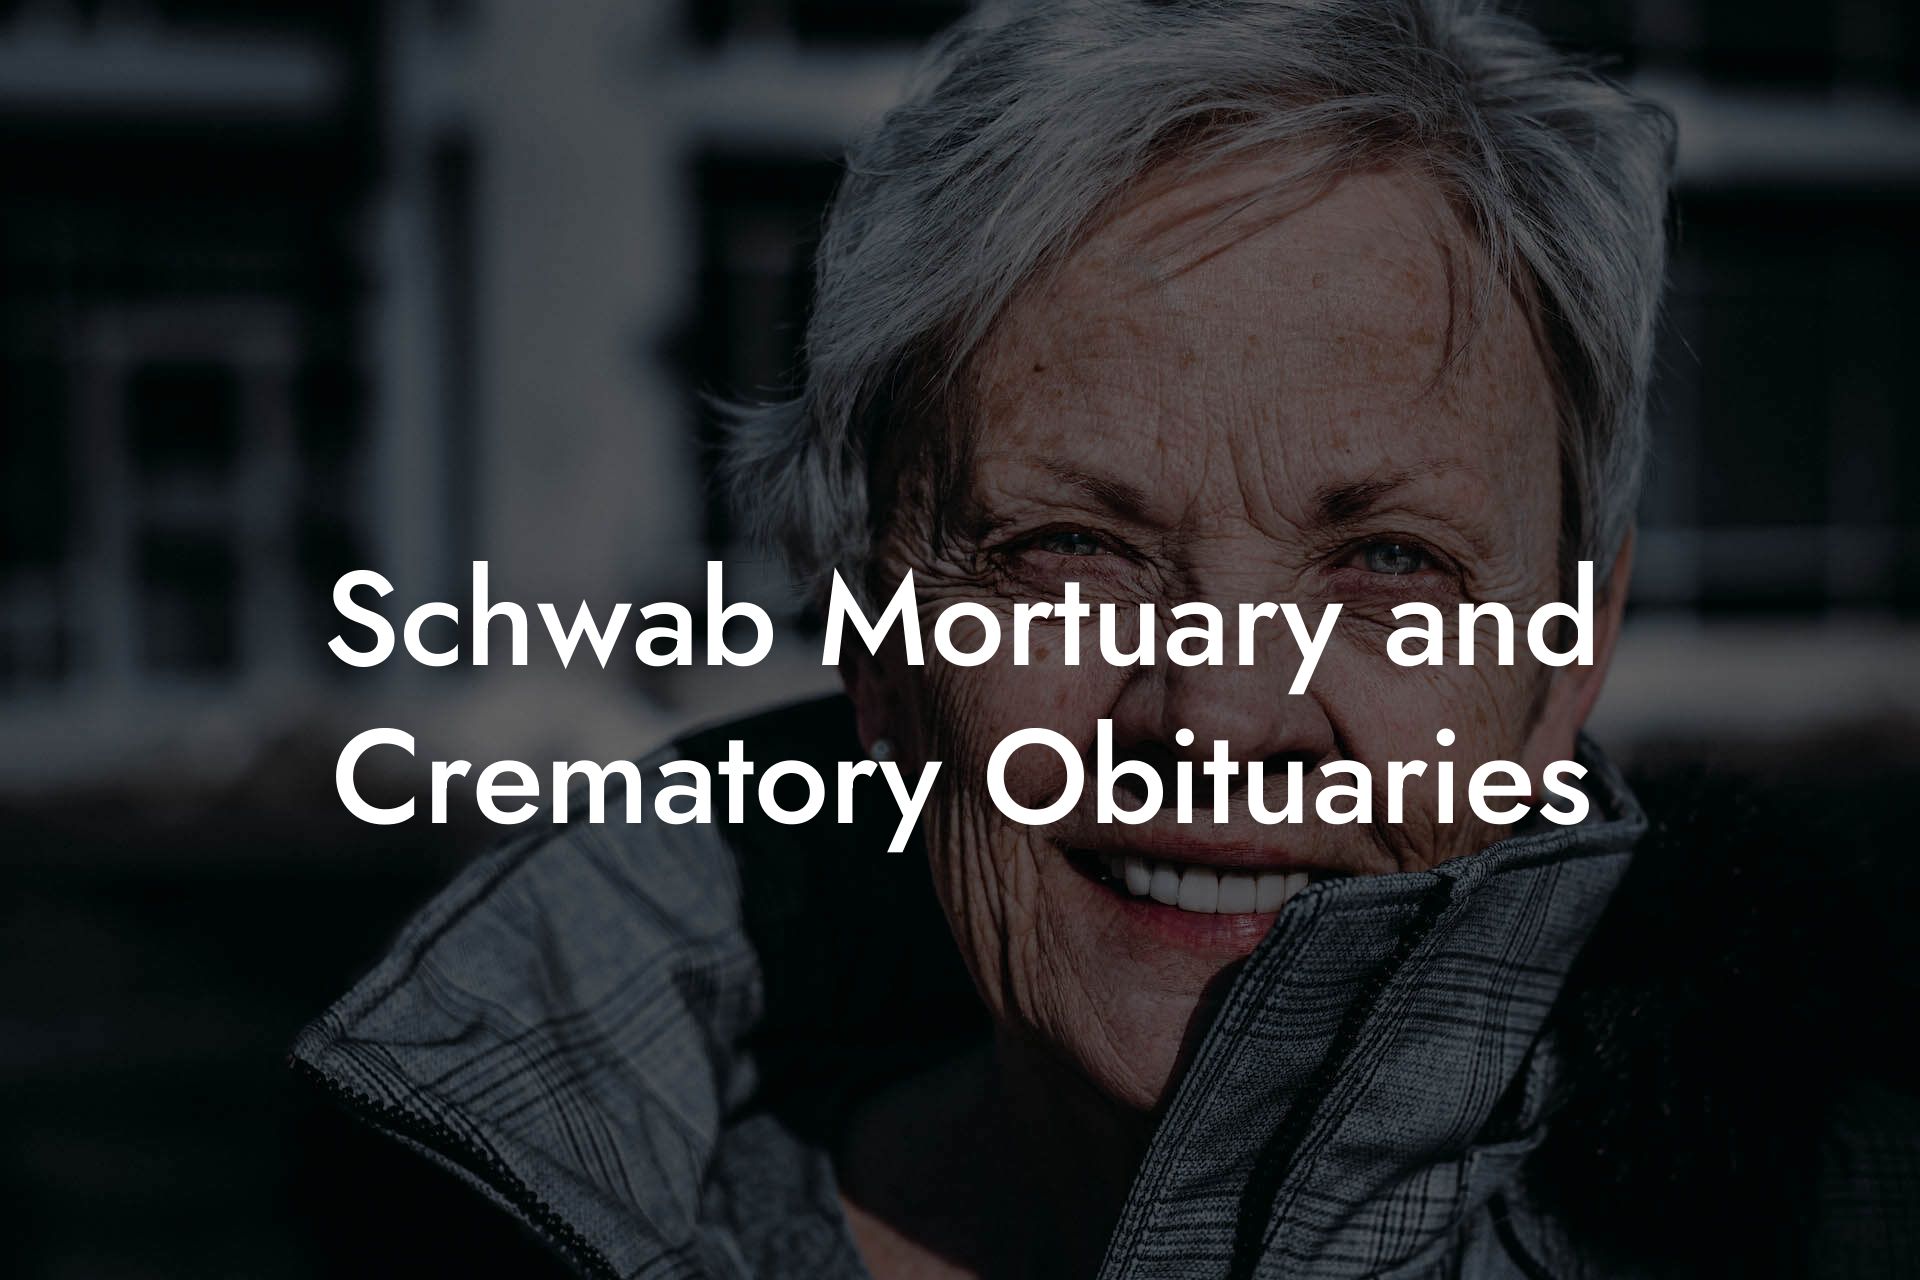 Schwab Mortuary and Crematory Obituaries